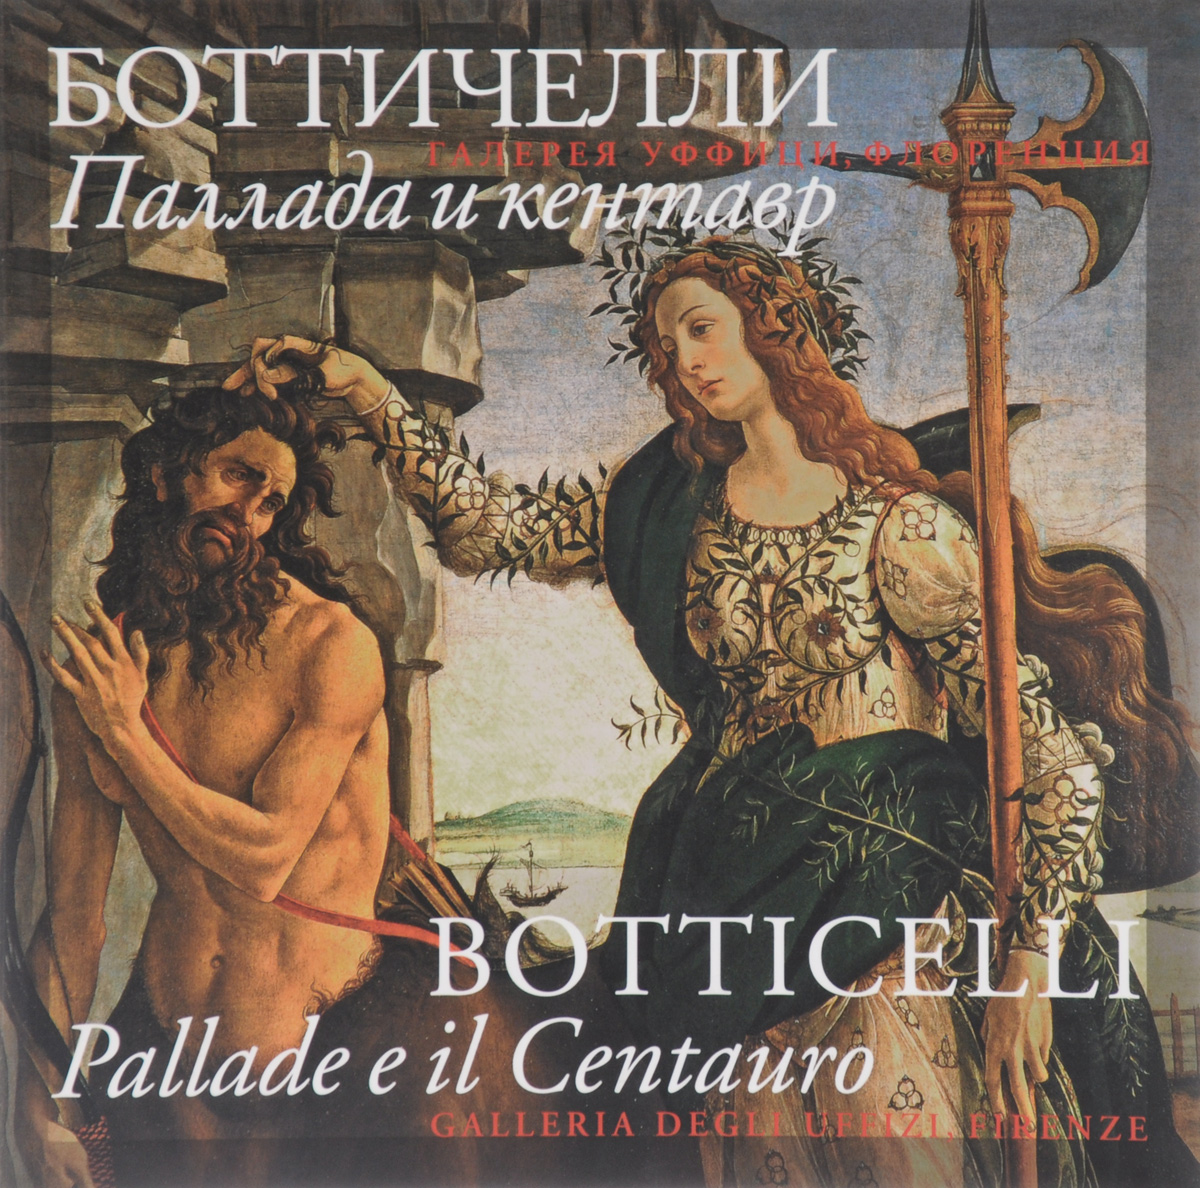 Сандро Боттичелли. Паллада и кентавр / Sondro Botticelli: Pallade e il Centauro